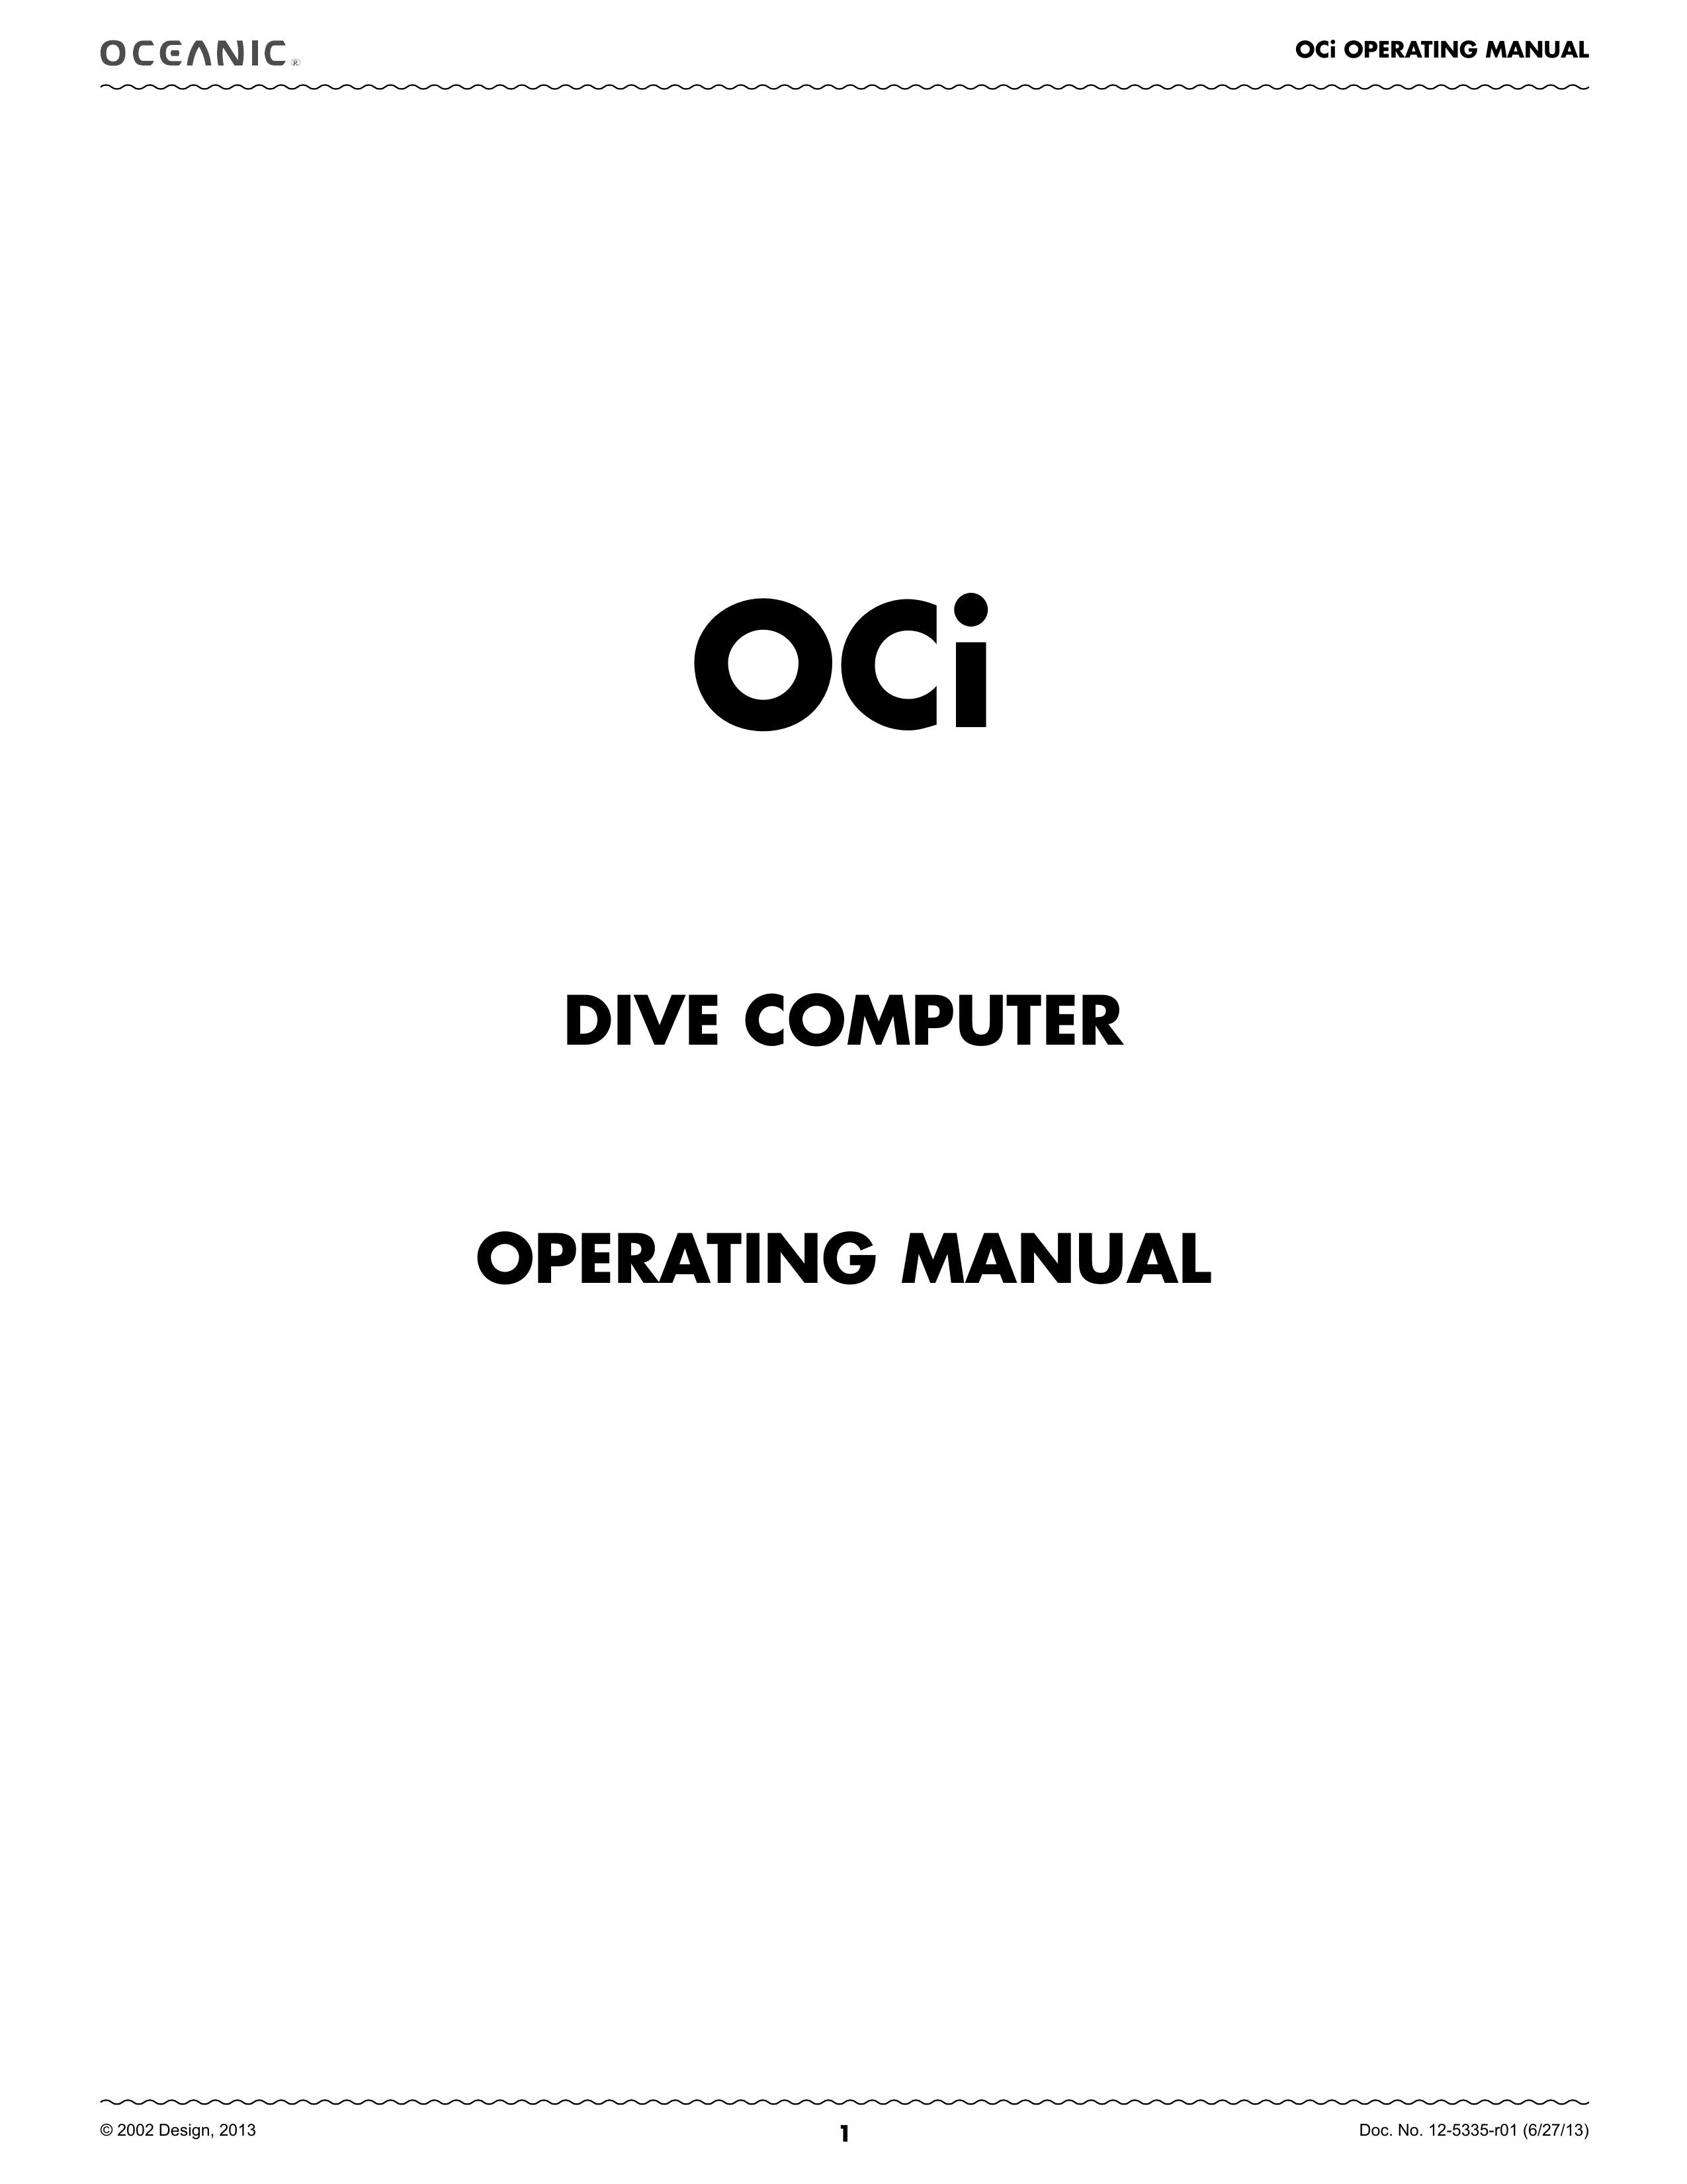 Oceanic 04-8791-24 Scuba Diving Equipment User Manual